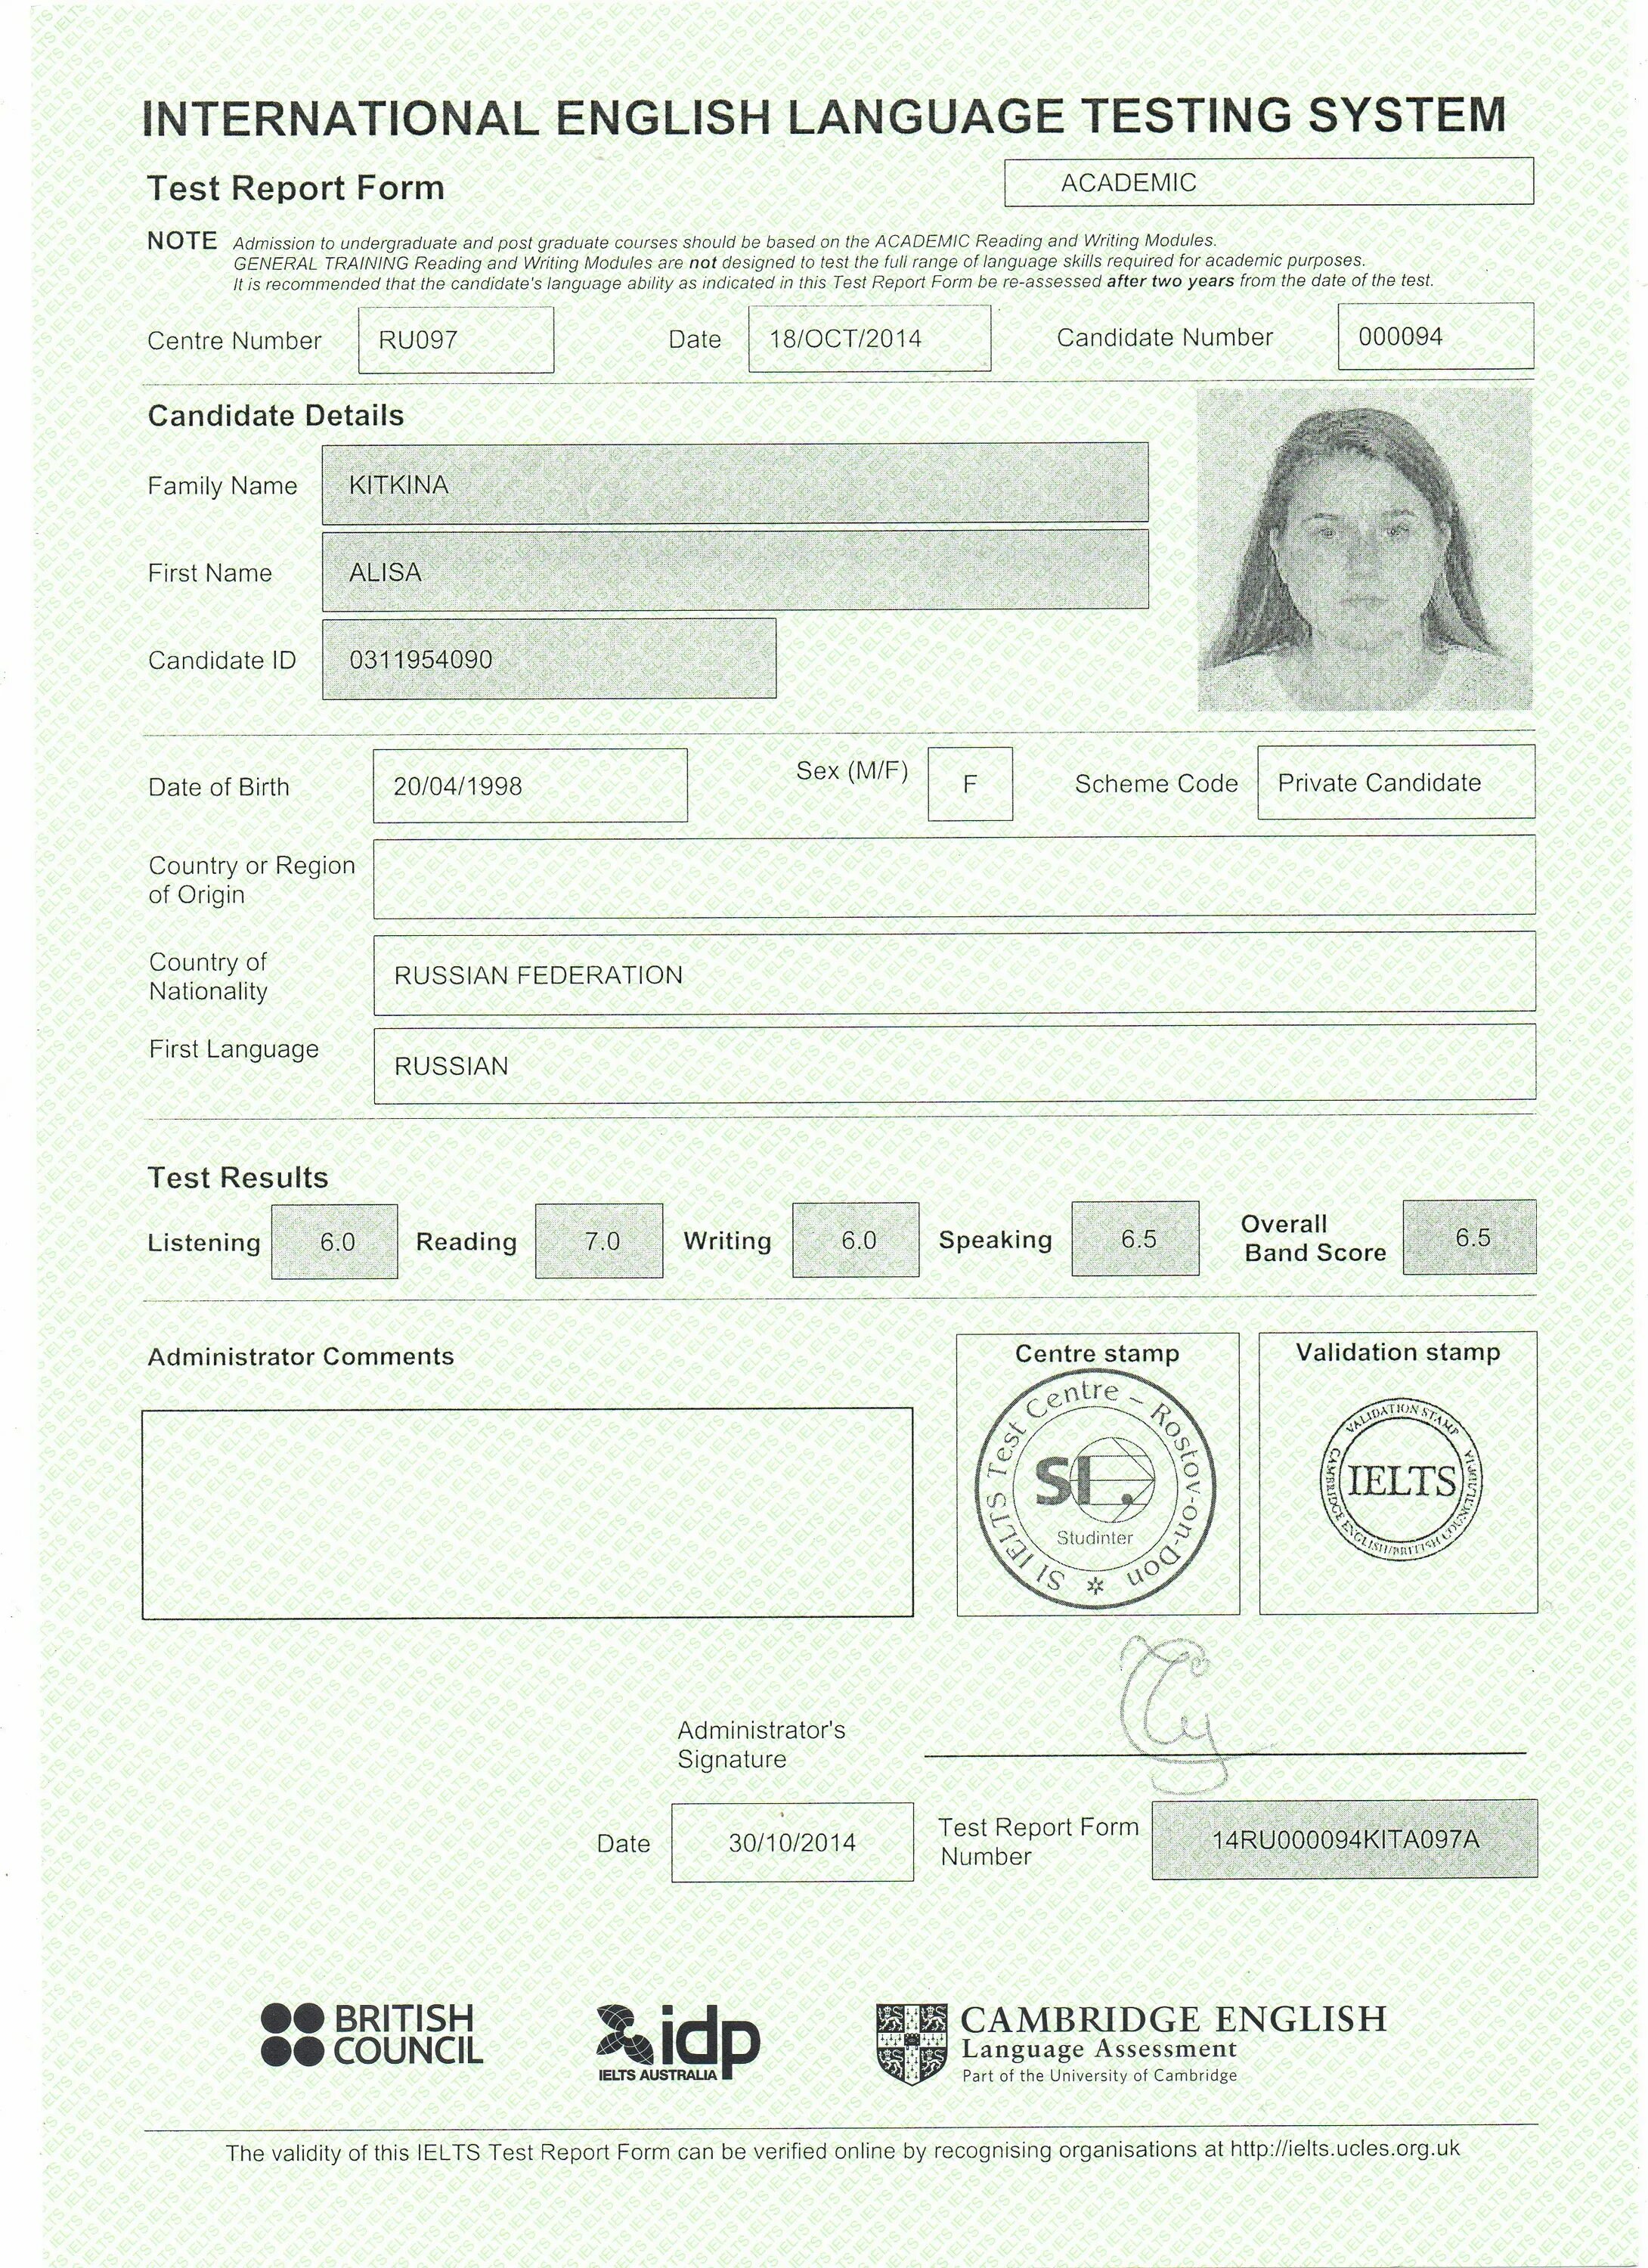 Ielts checker. IELTS Certificate 6.5. IELTS Академический 7.0. 6.5 IELTS Бланка. Сертификат IELTS 7.0.